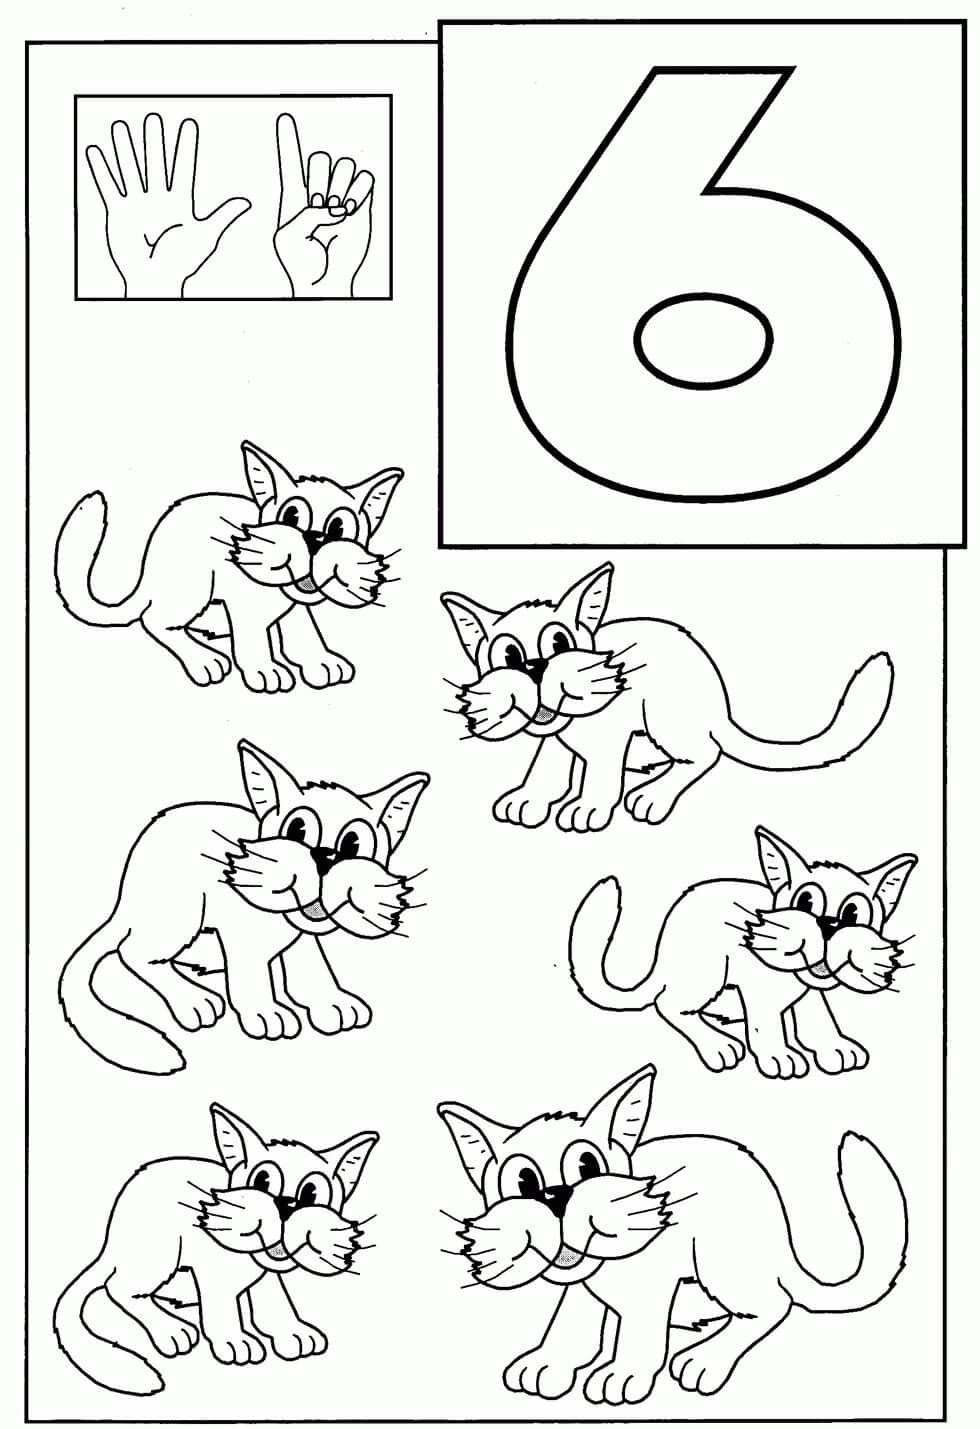 Gato Número Seis y Seis para colorear, imprimir e dibujar –